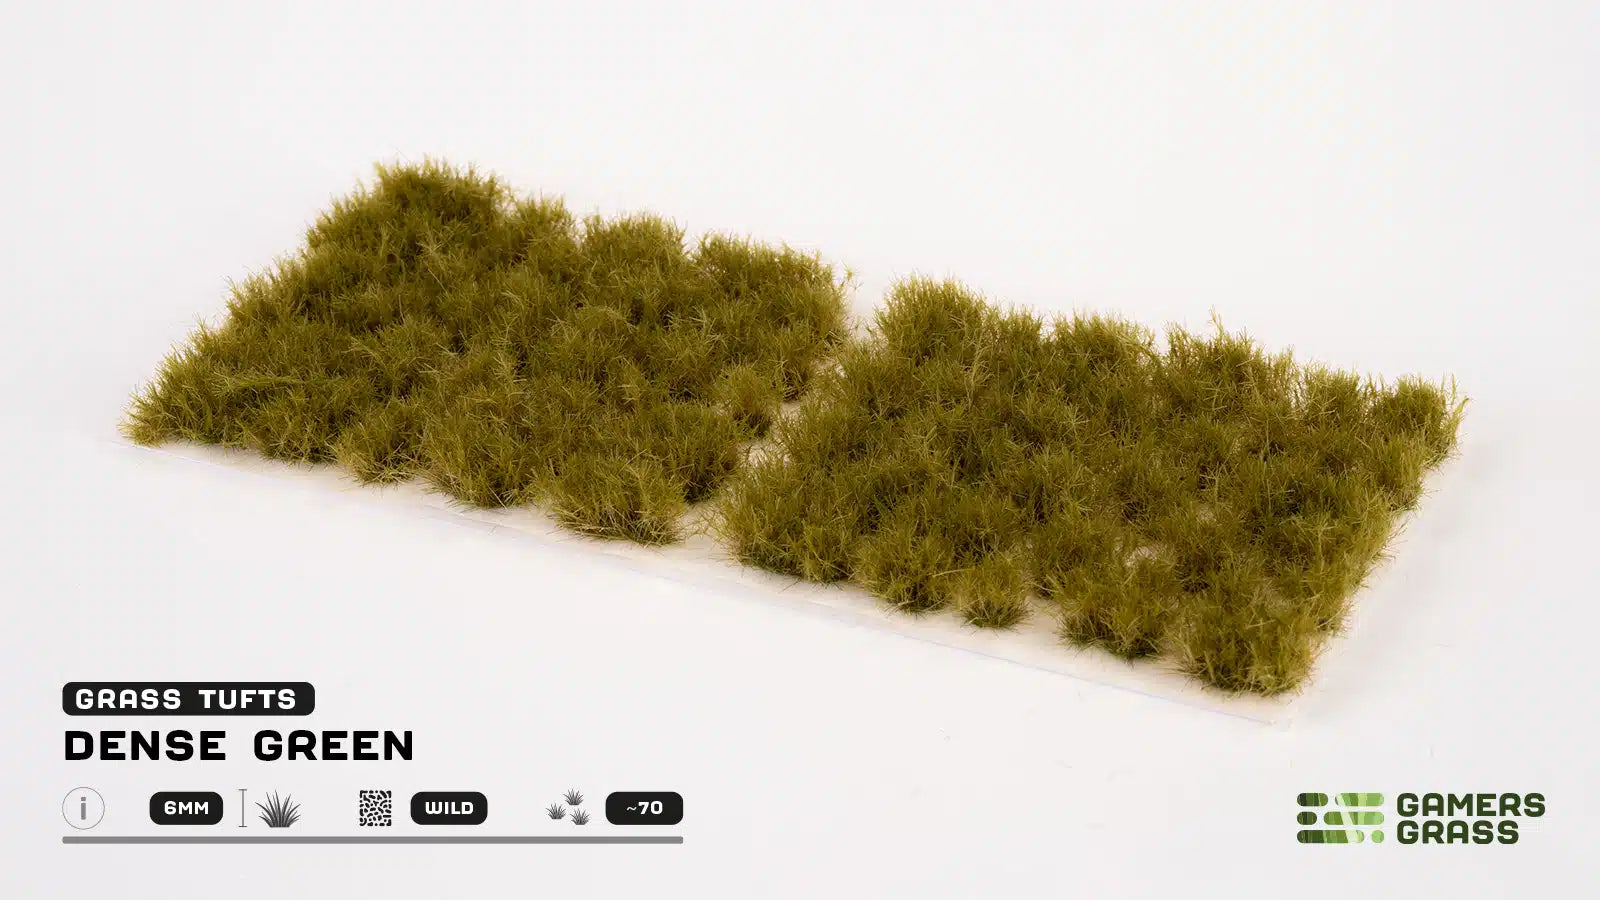 Dense Green 6mm Tufts (Wild) - Gamers Grass